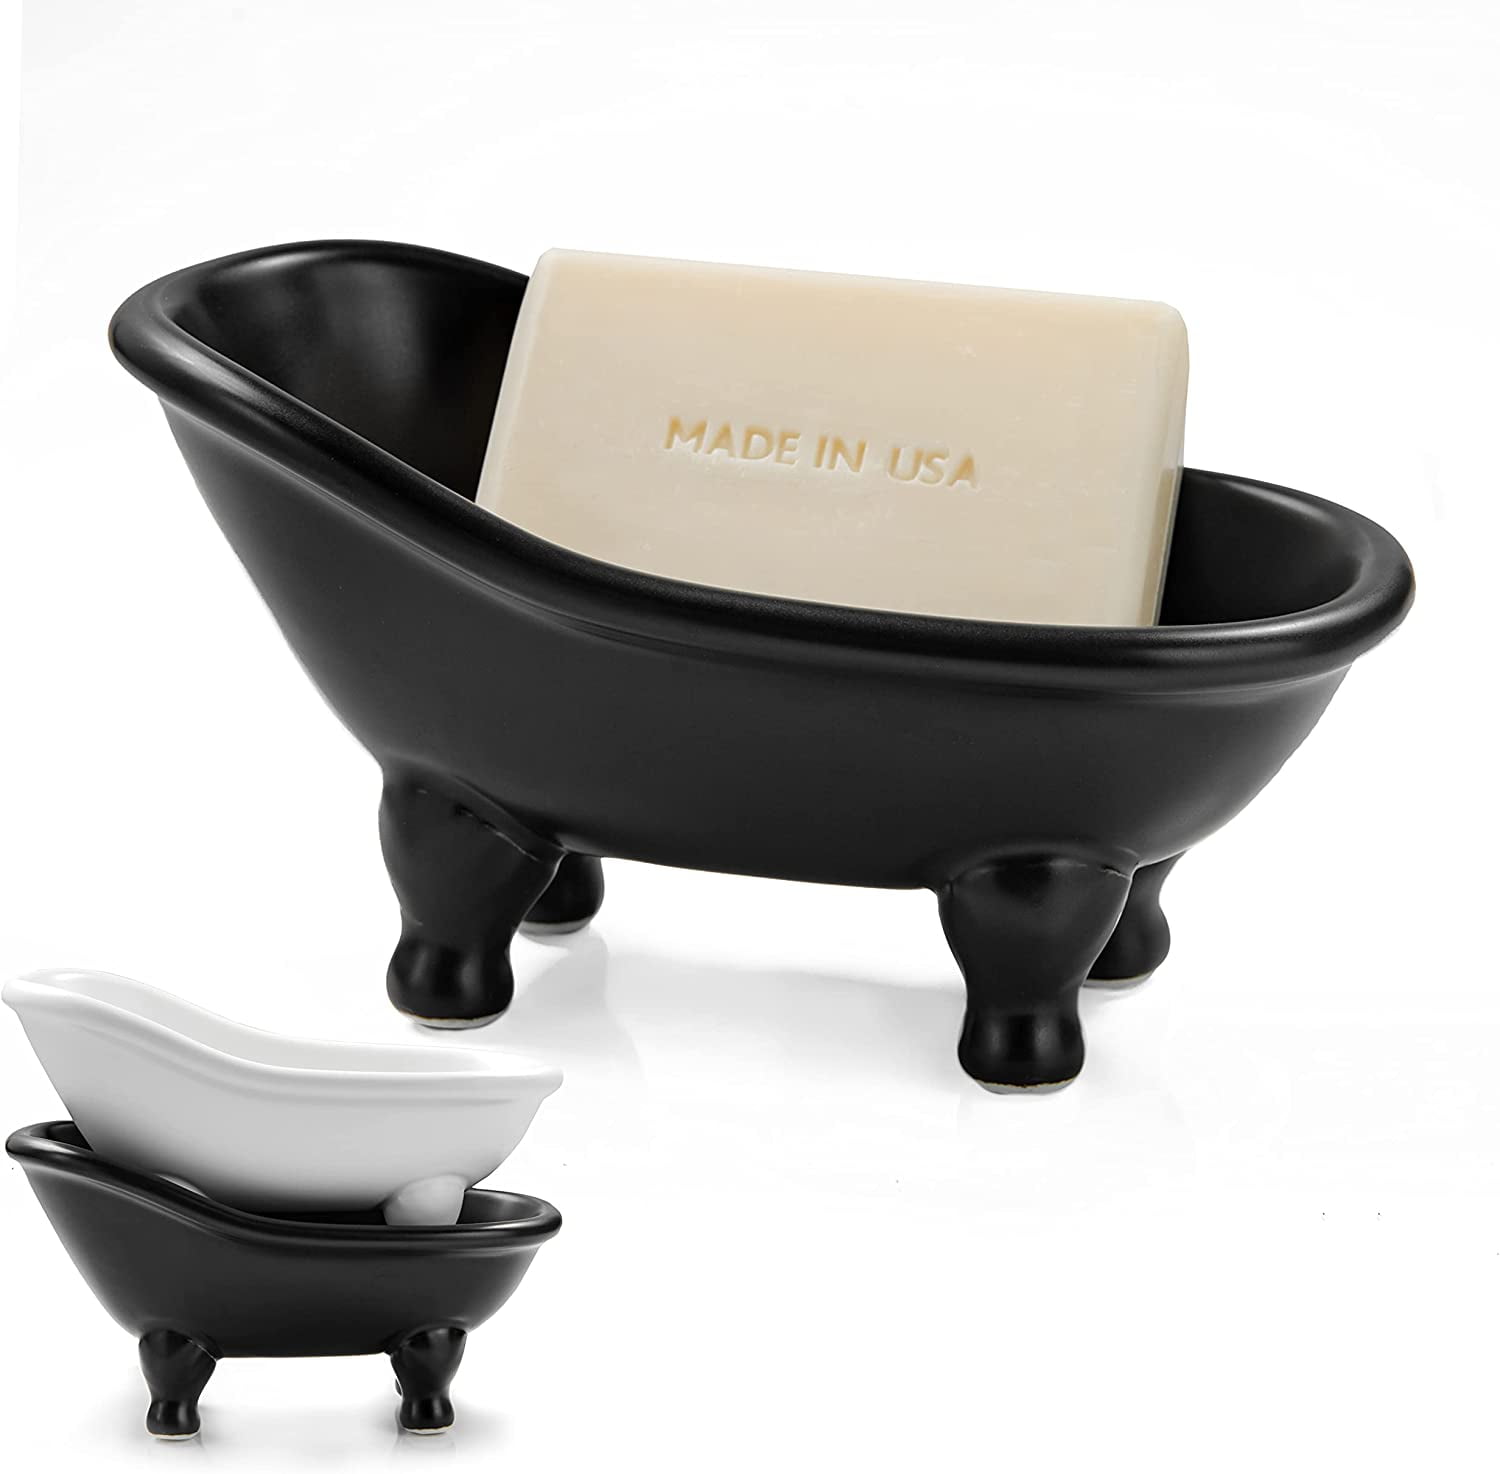 Mini Bathtub Soap Jewelry Makeup Organizer Box – KEYSTONE HOME GOODS